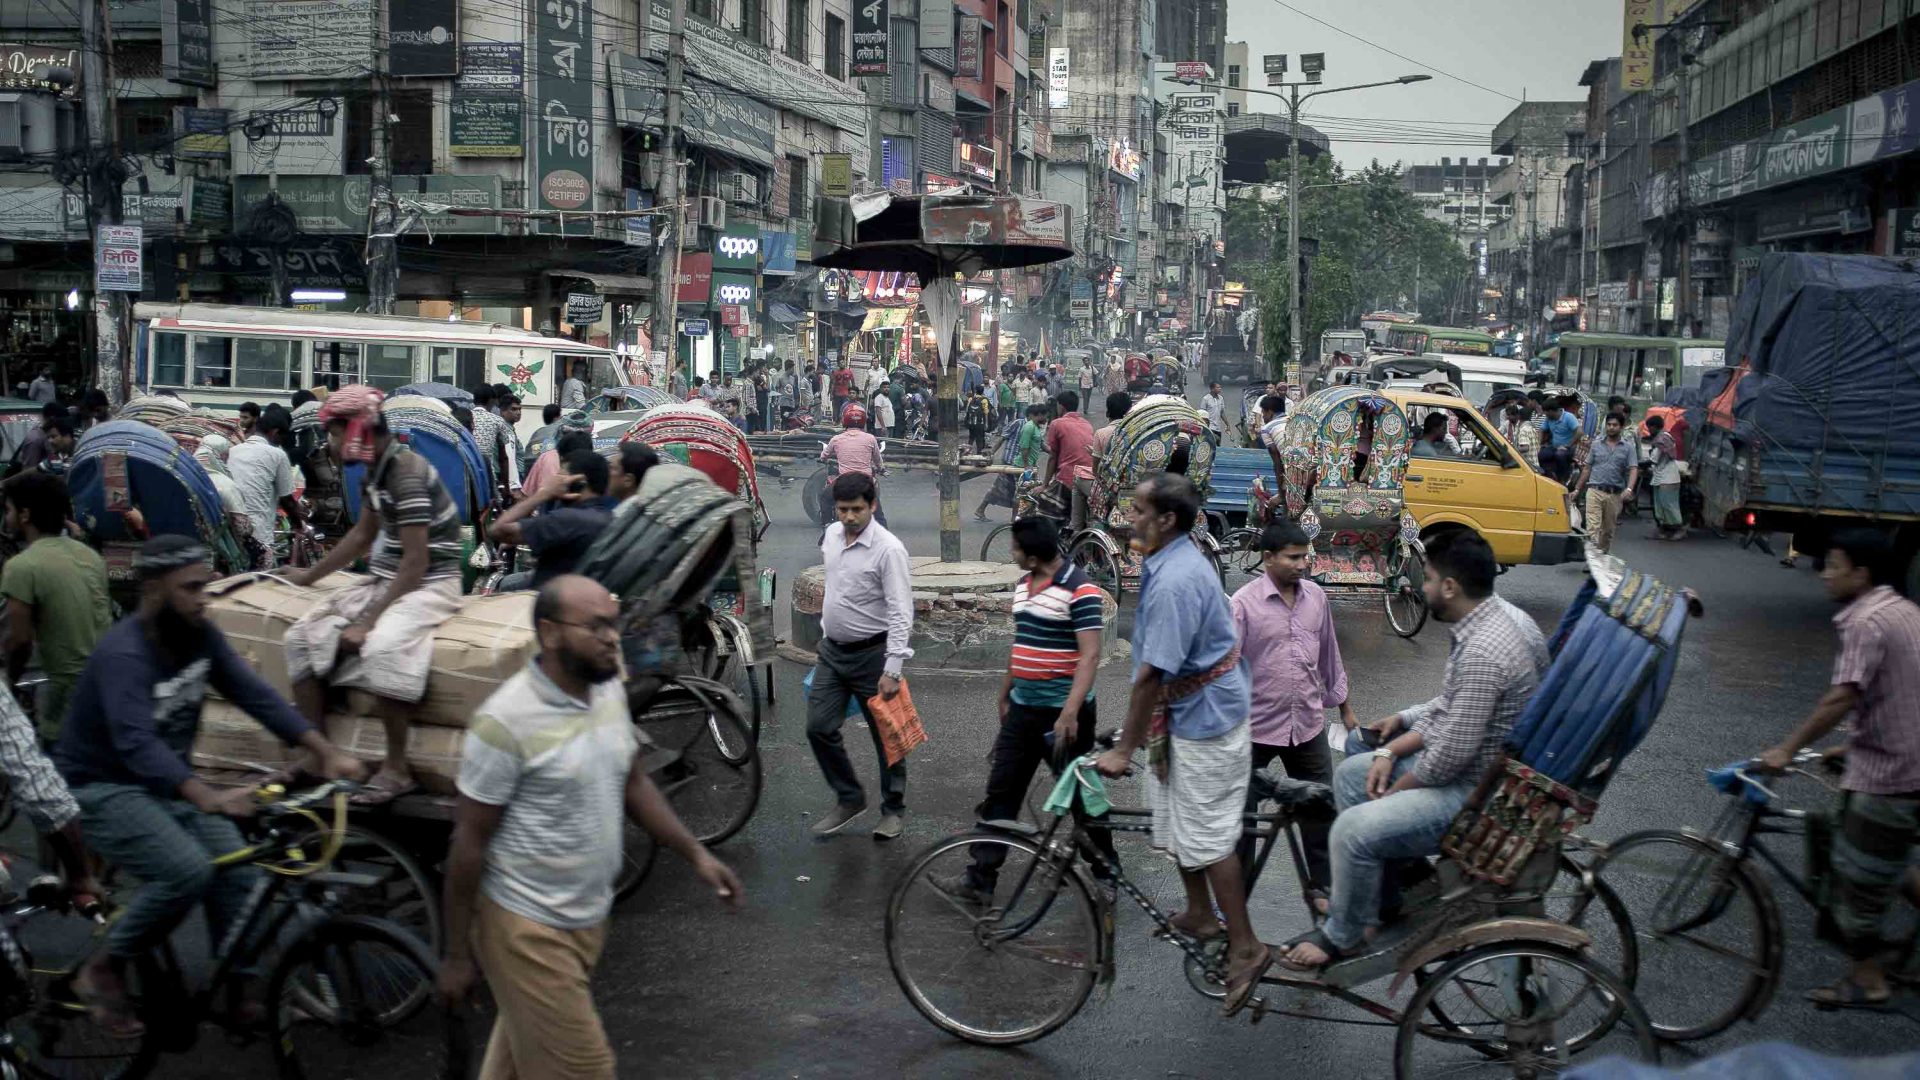 One of the bustling streets of Dhaka, Bangladesh.